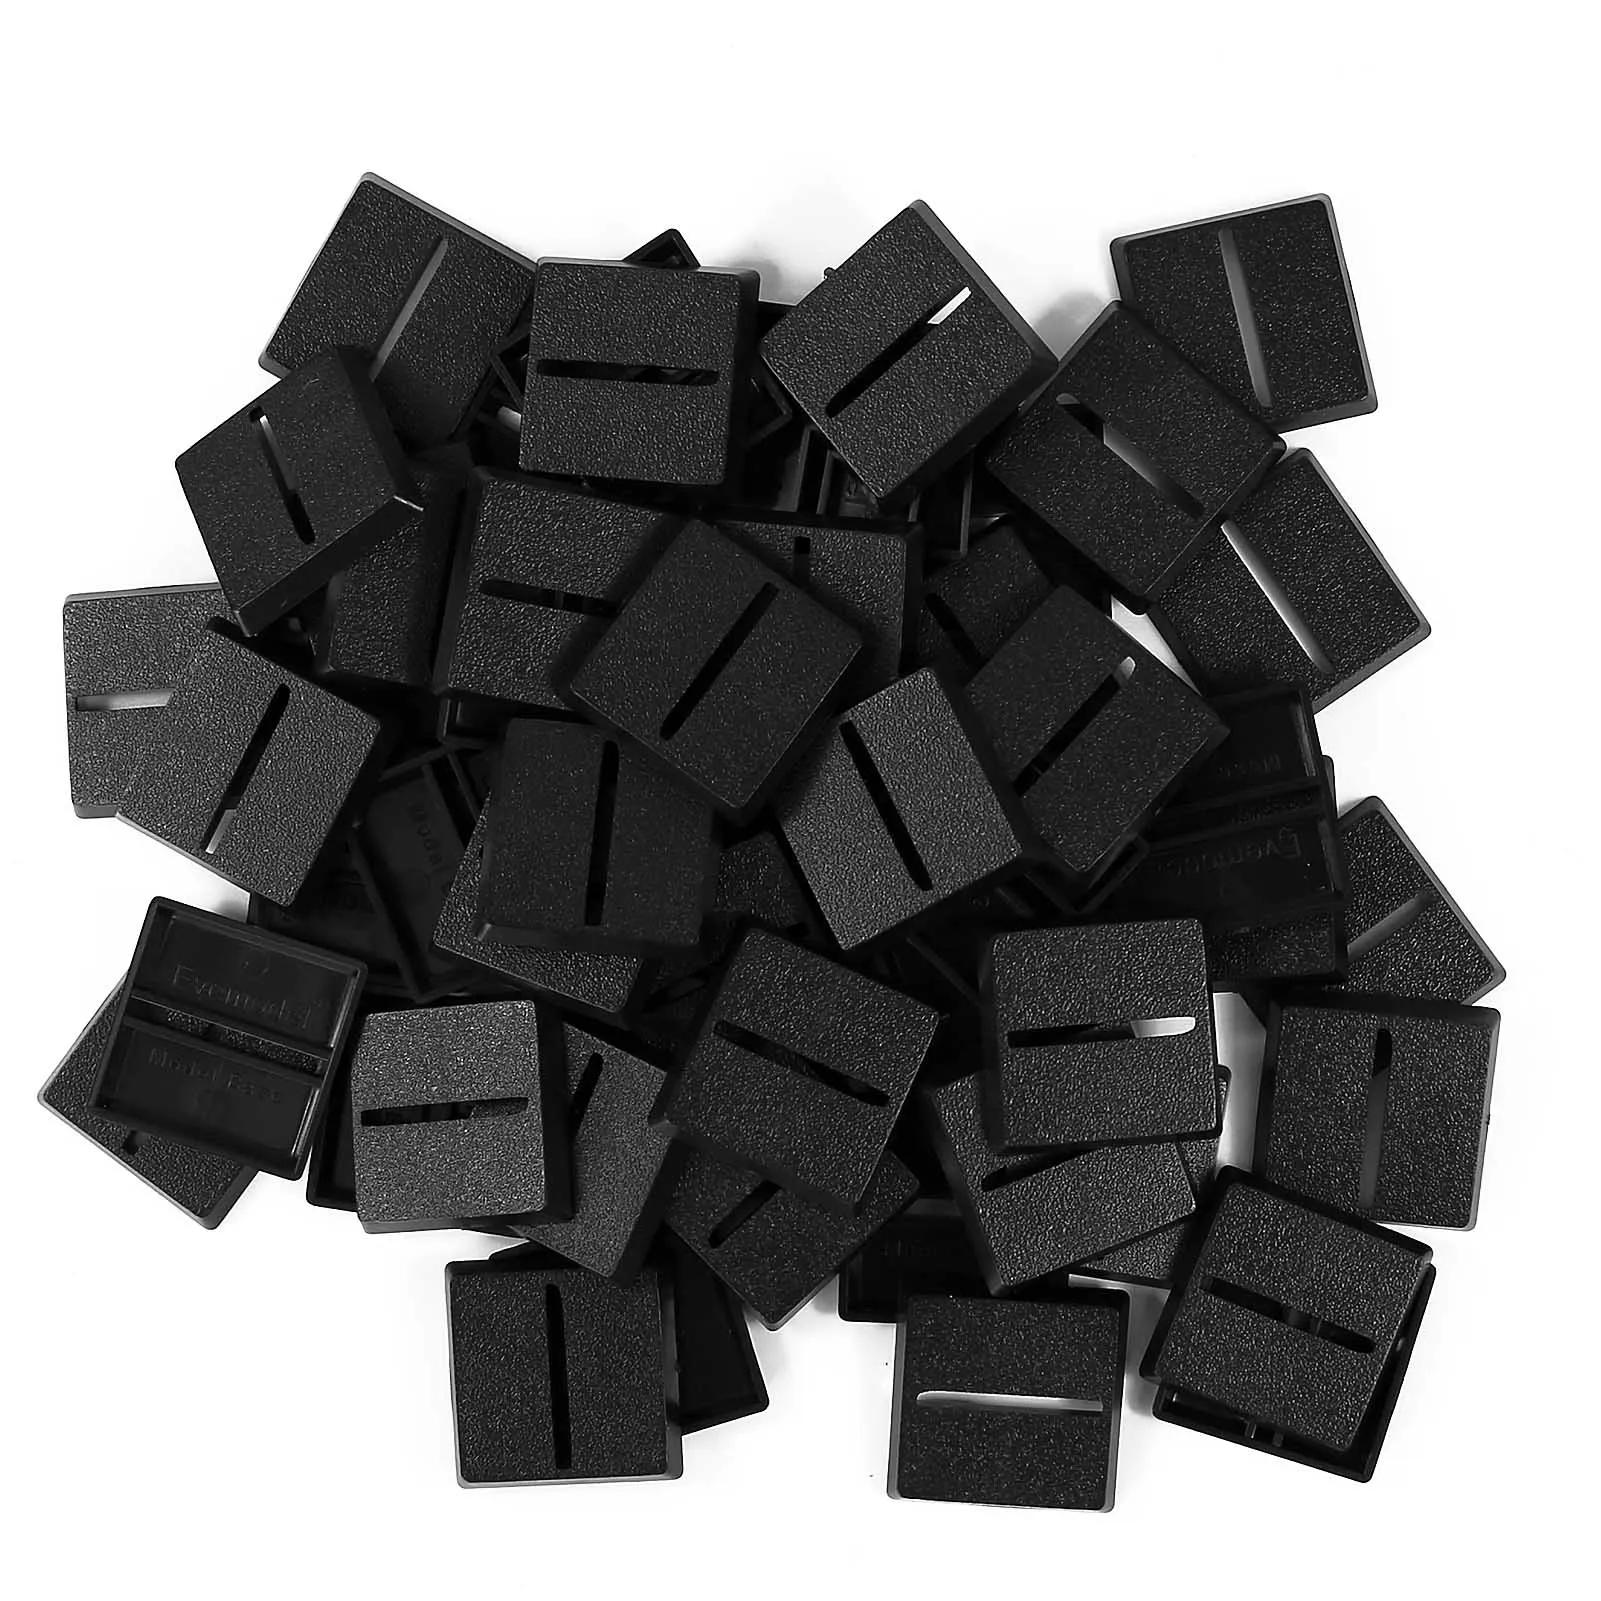 

Evemodel 100pcs 25mm Square Slot Bases Black Plastic for Warhammer Miniature Wargames MB2525